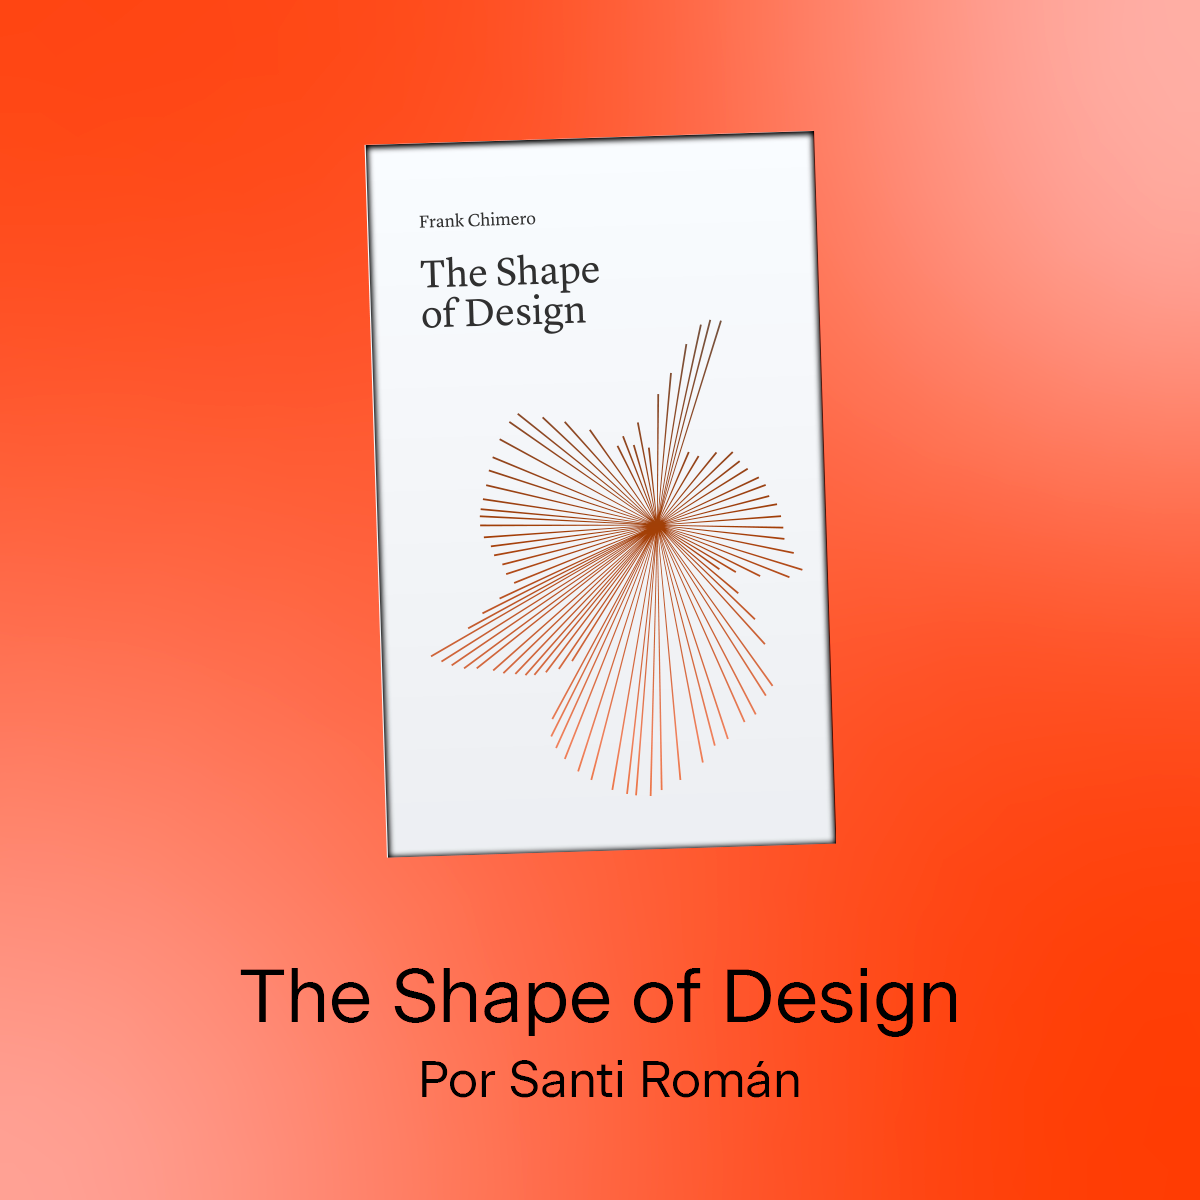 The shape of design